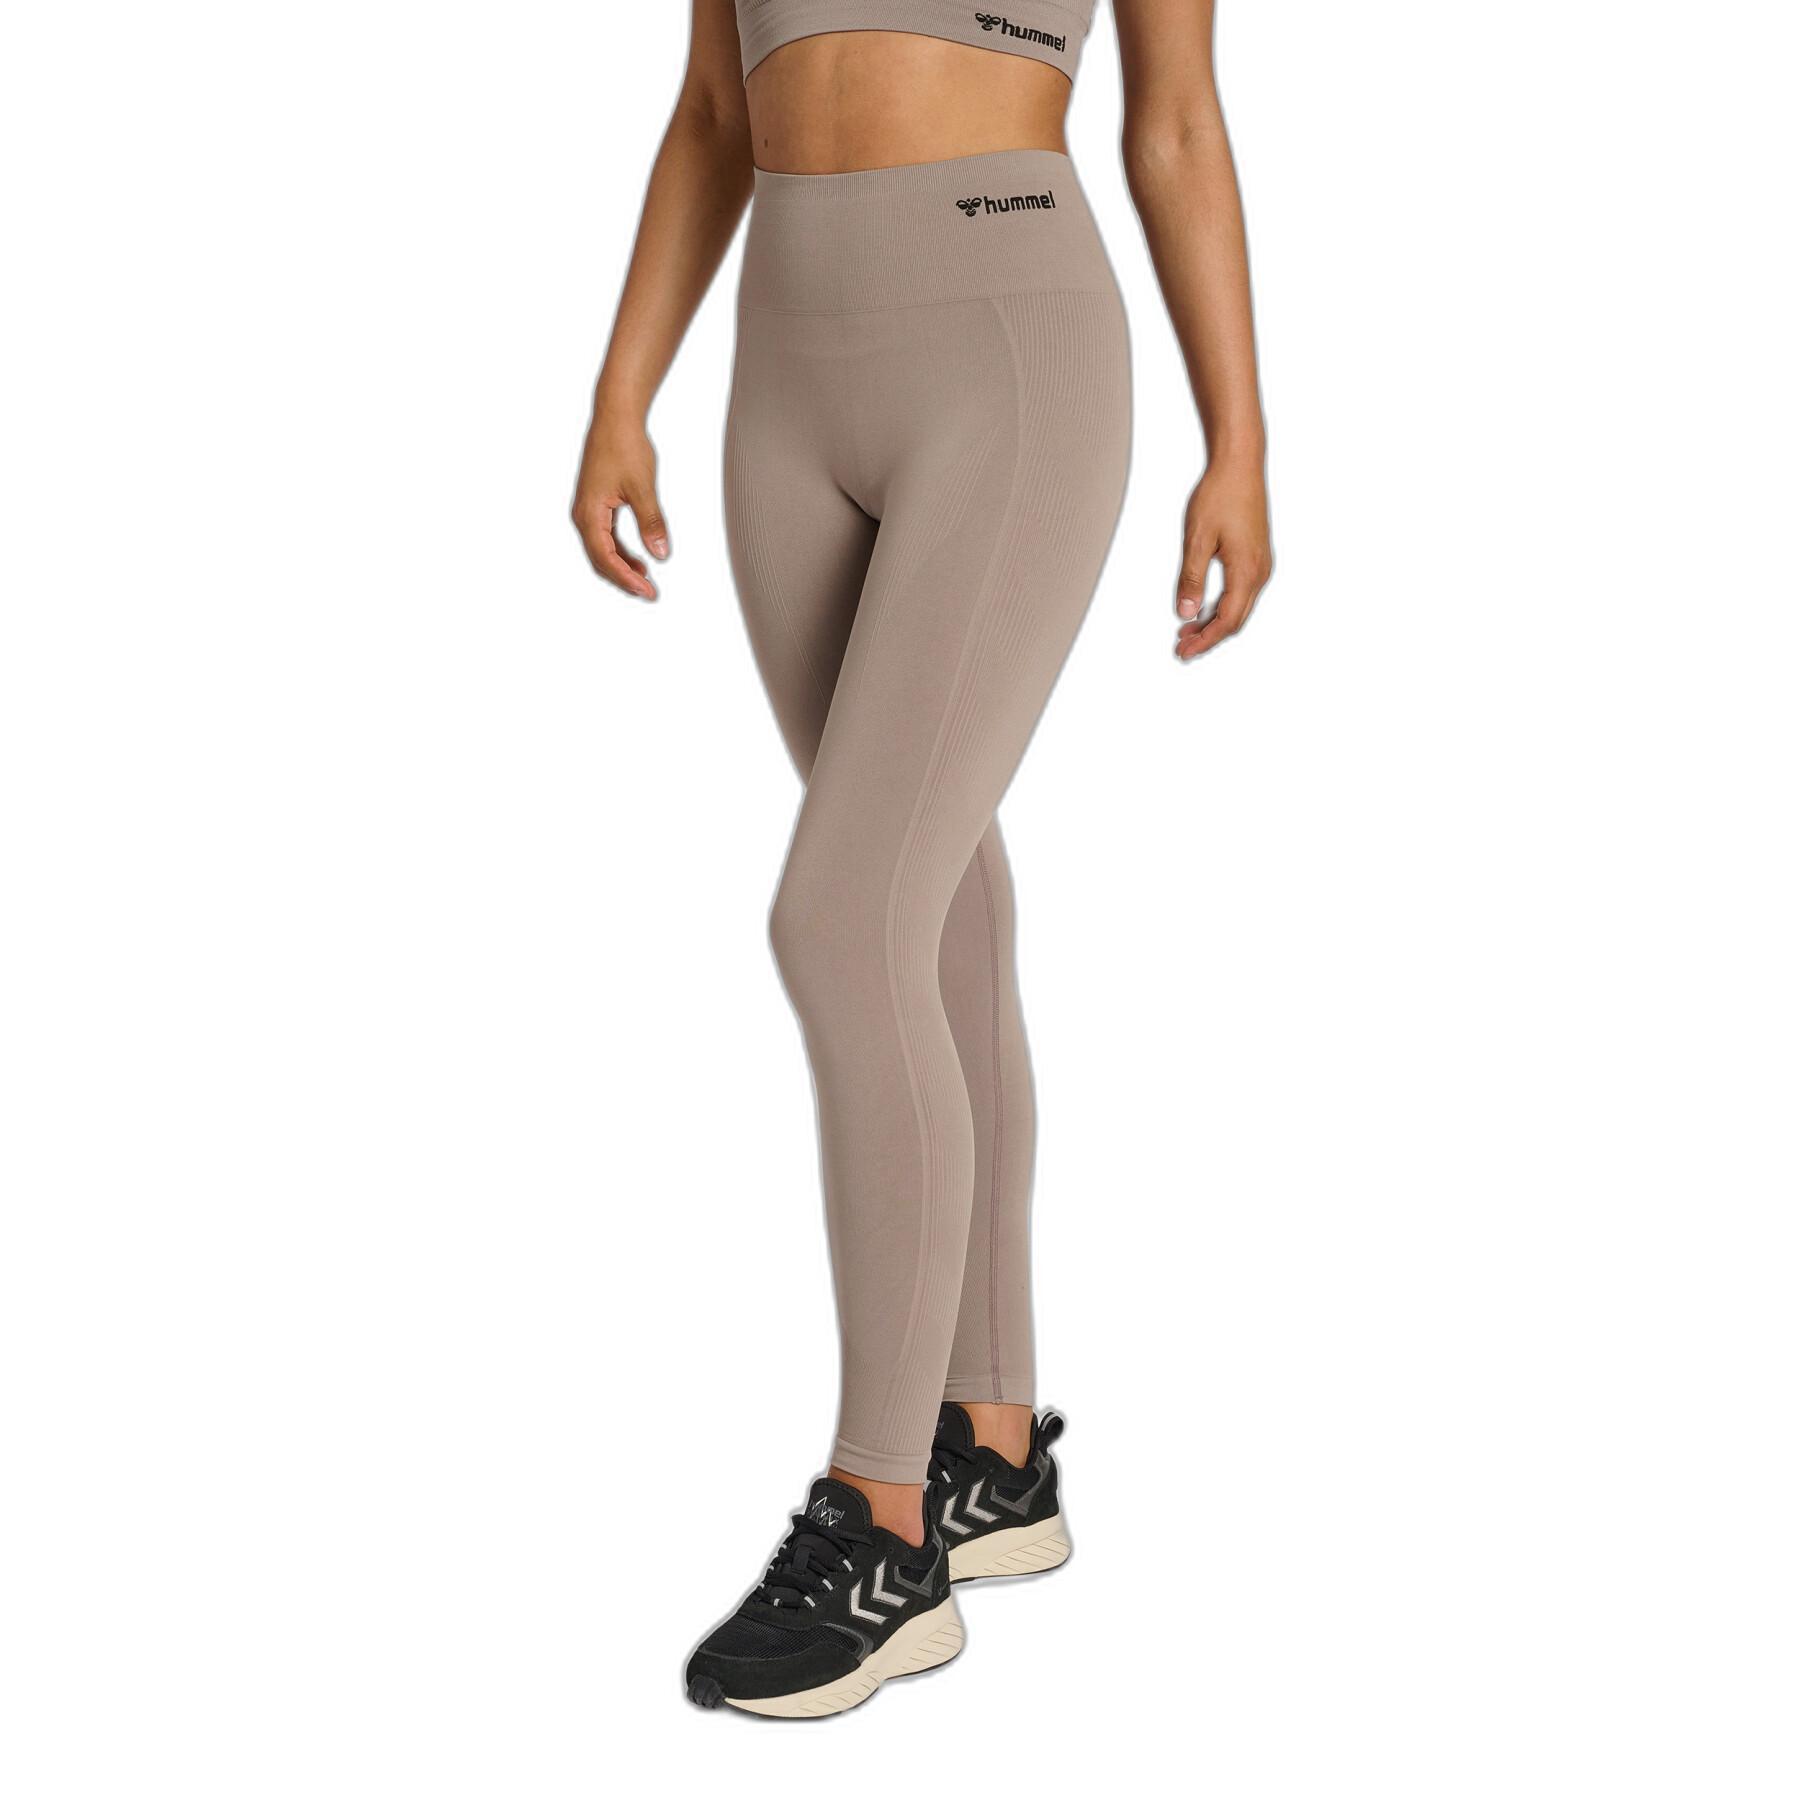 Legging Hummel - - Brands TIF top - Hummel woman Lifestyle